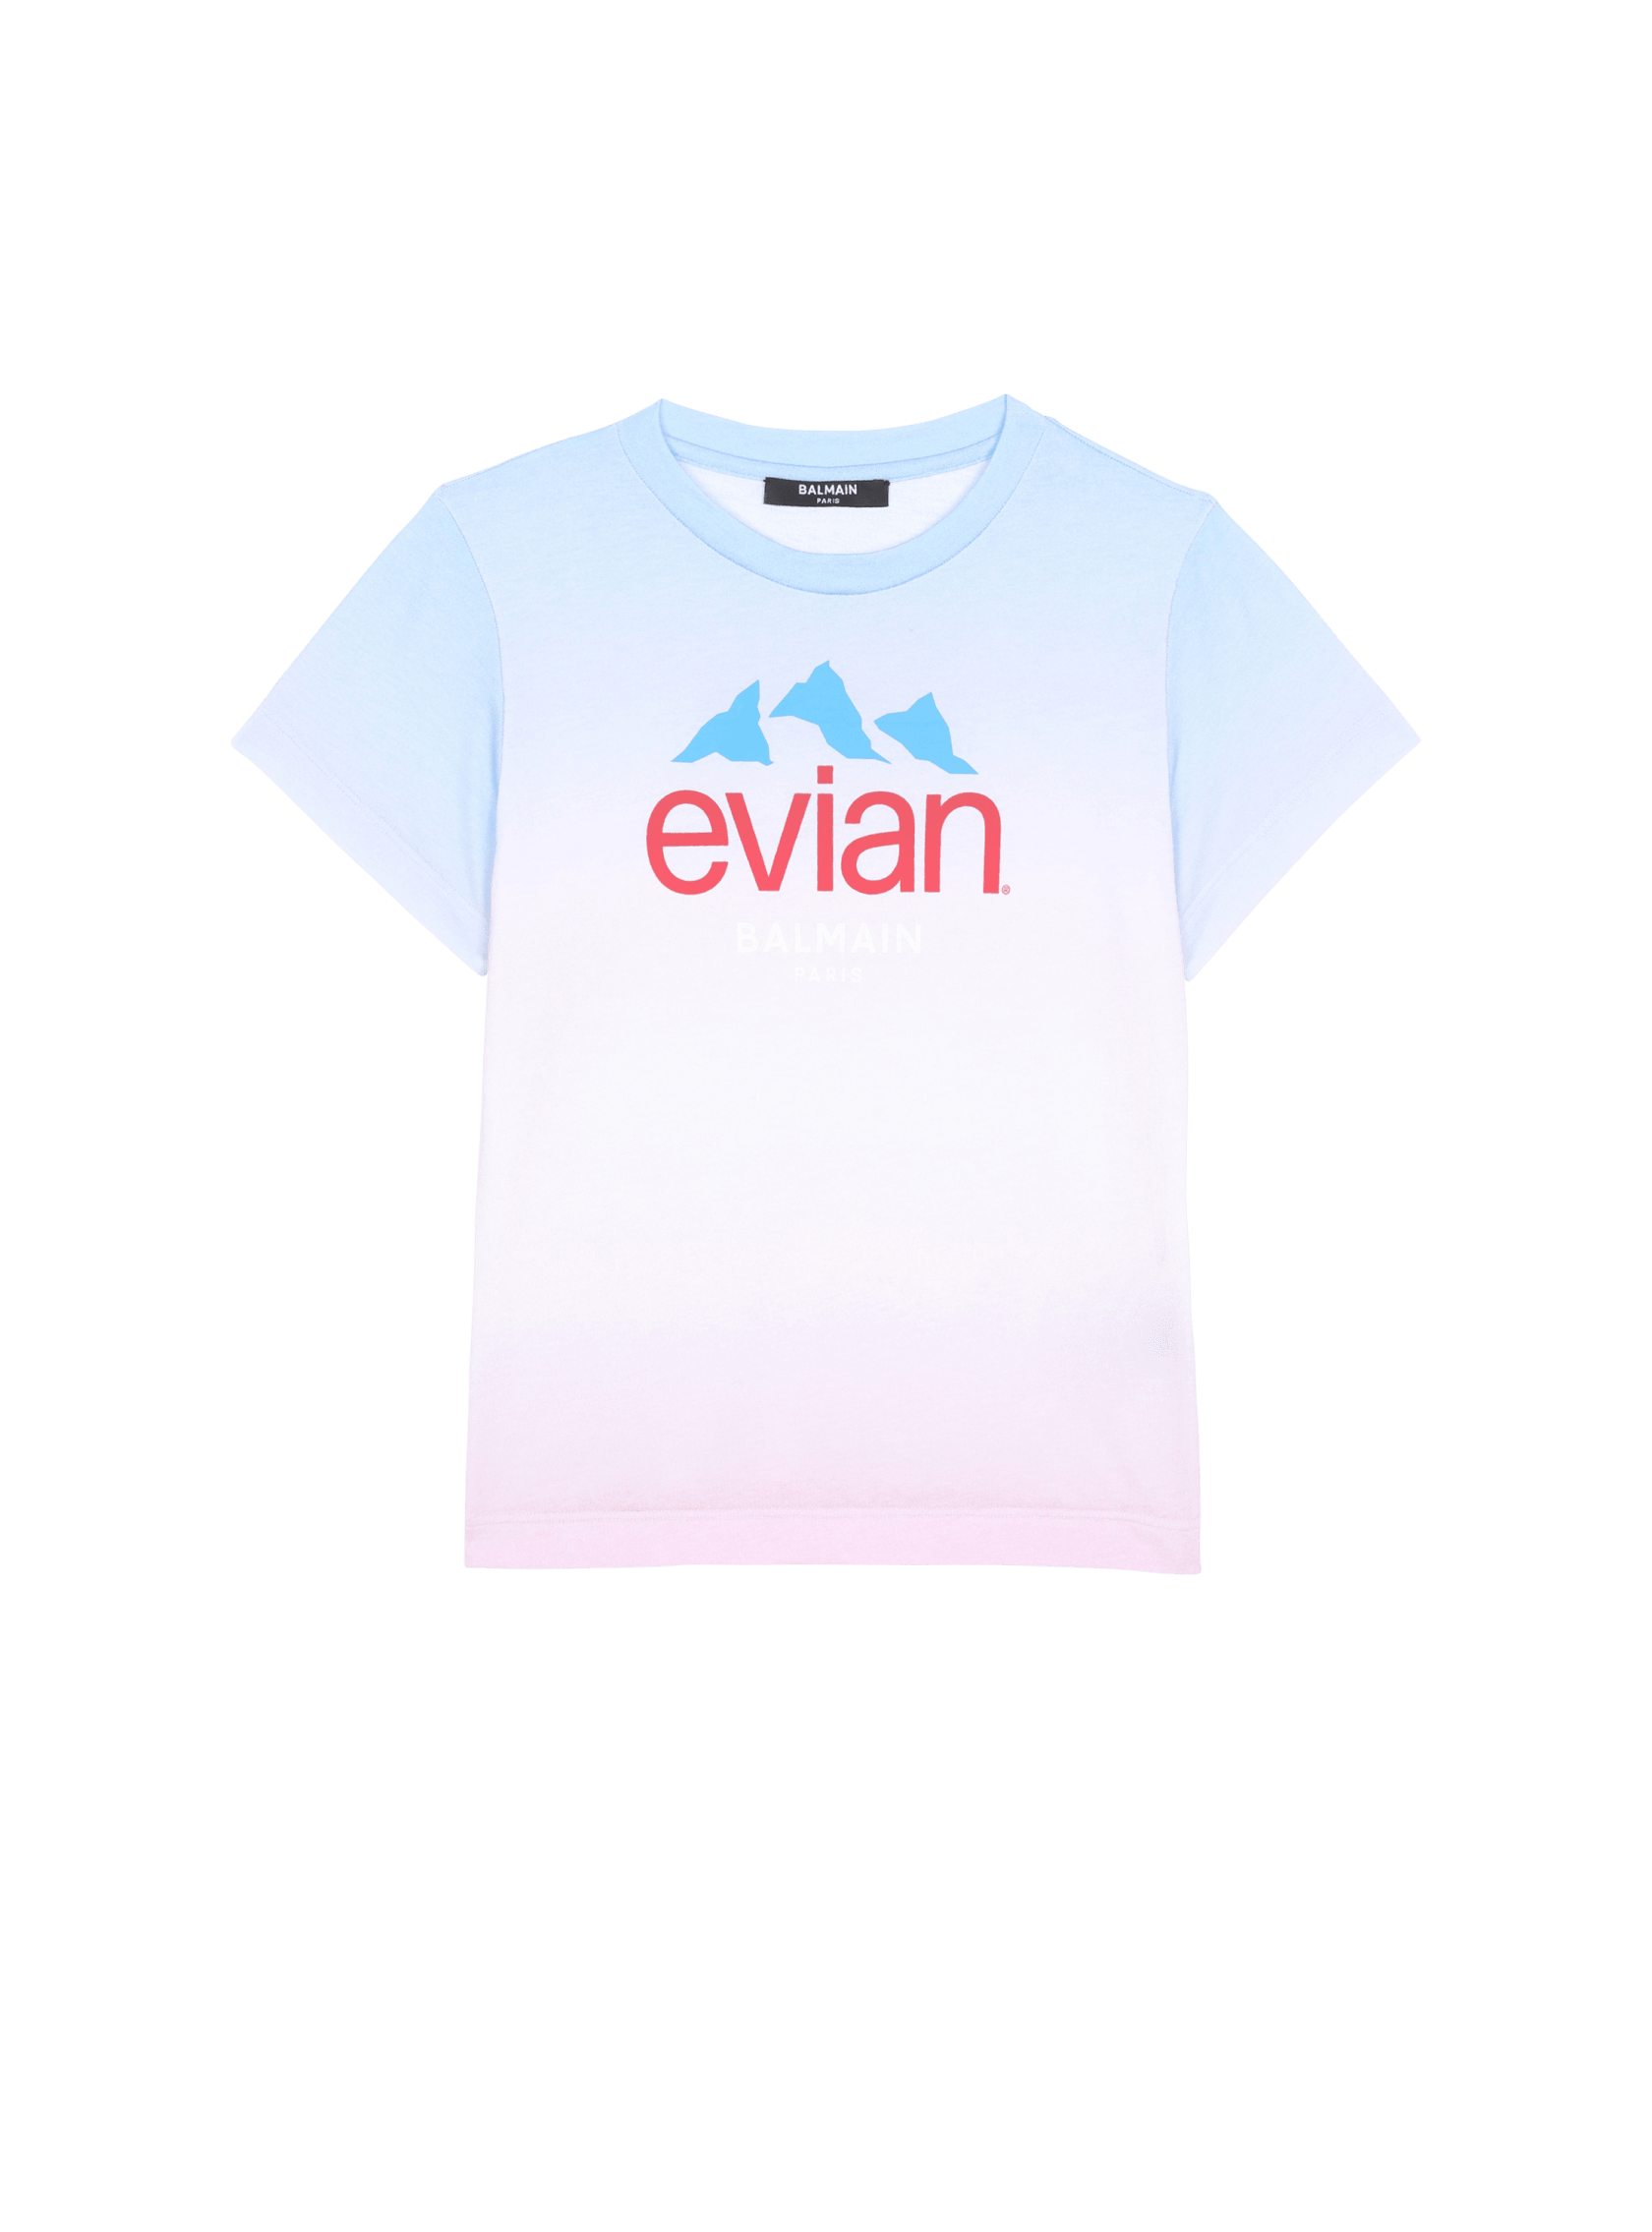 undefined | Balmain x Evian - T-shirt dégradé